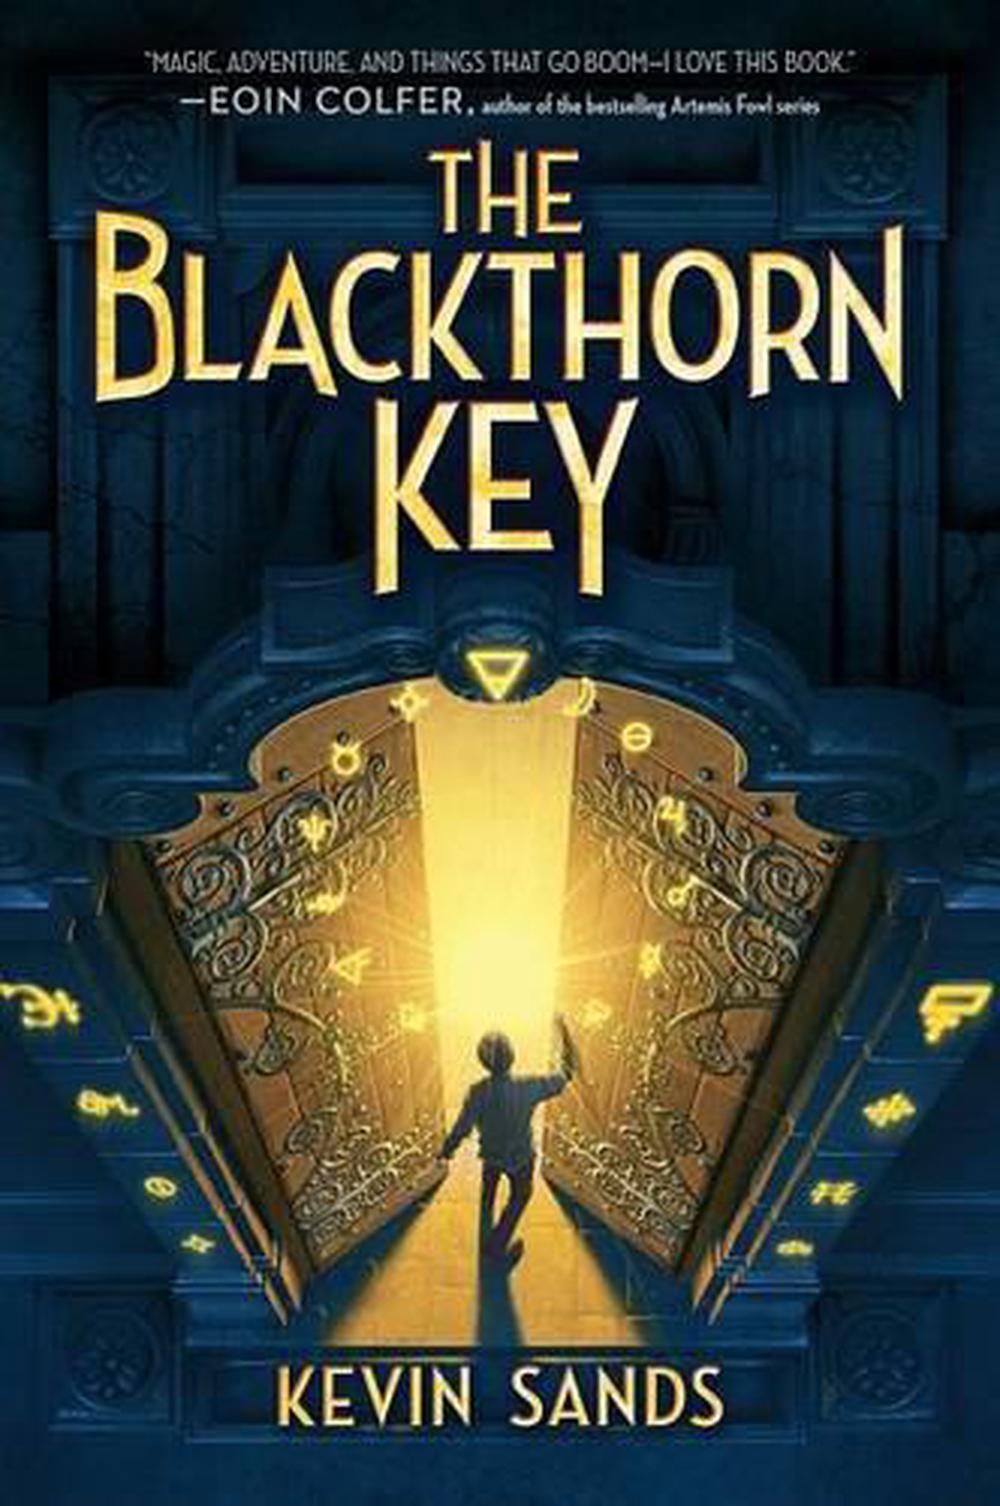 the blackthorn key book 1